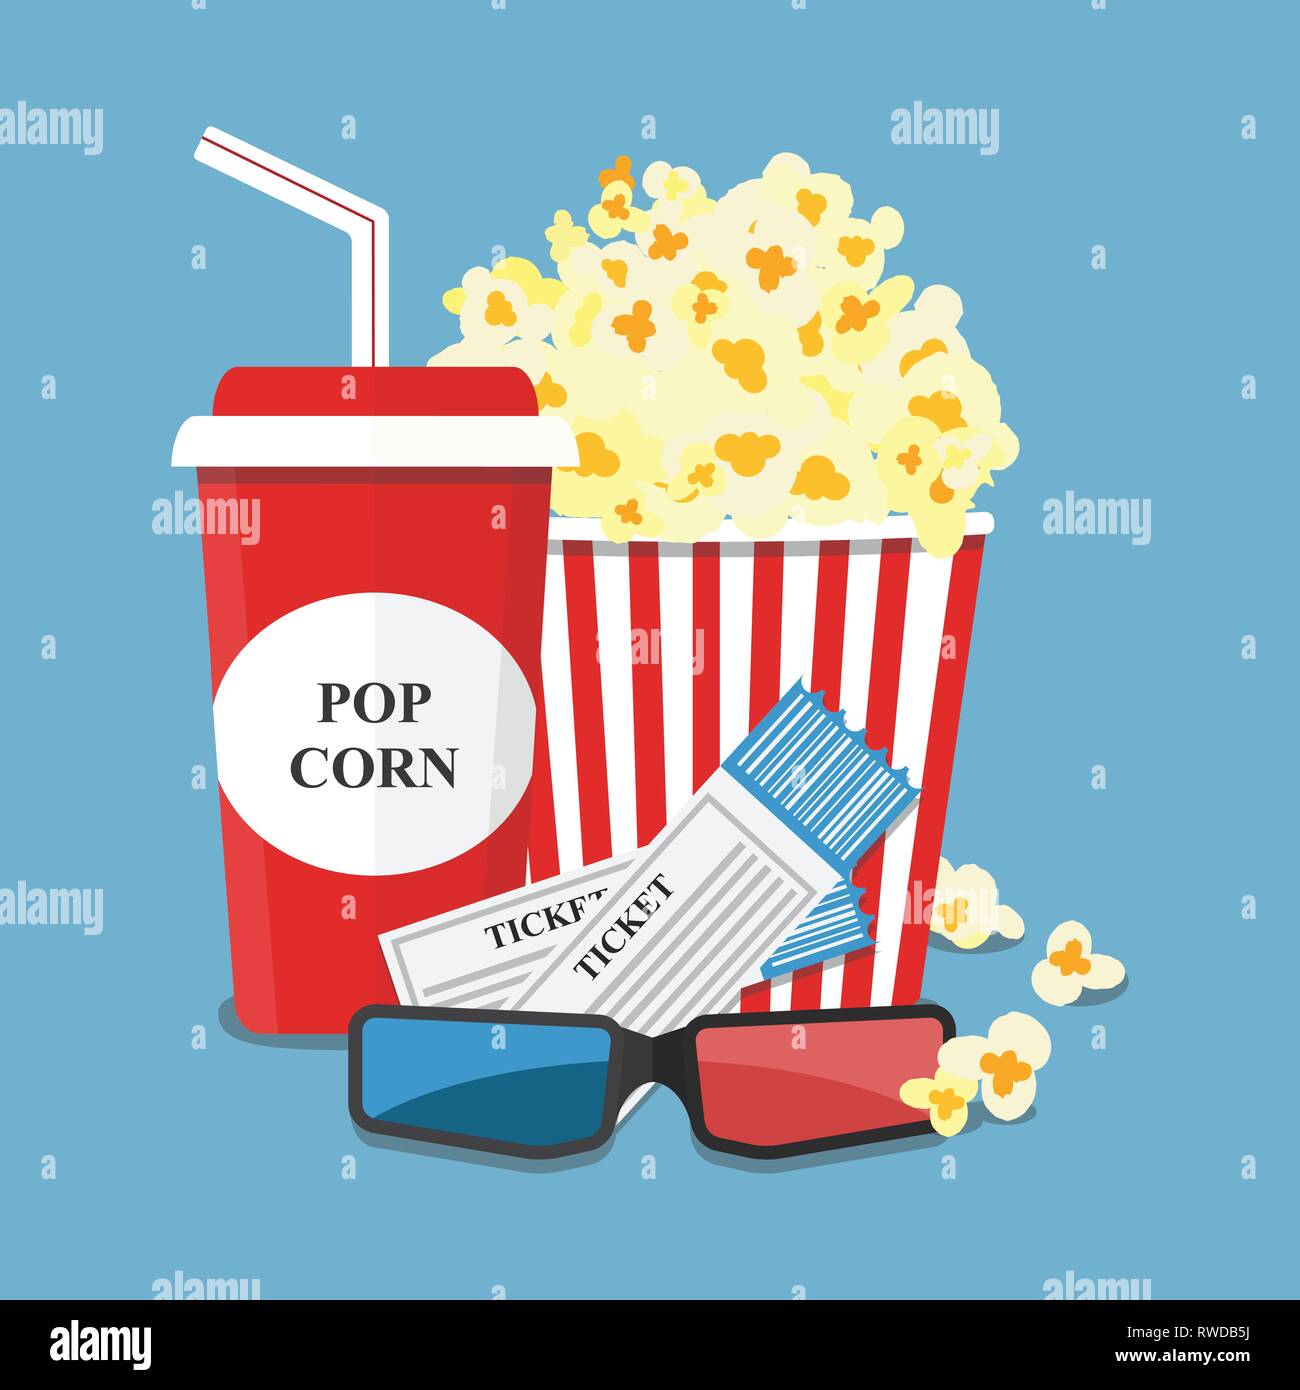 movie popcorn and drink